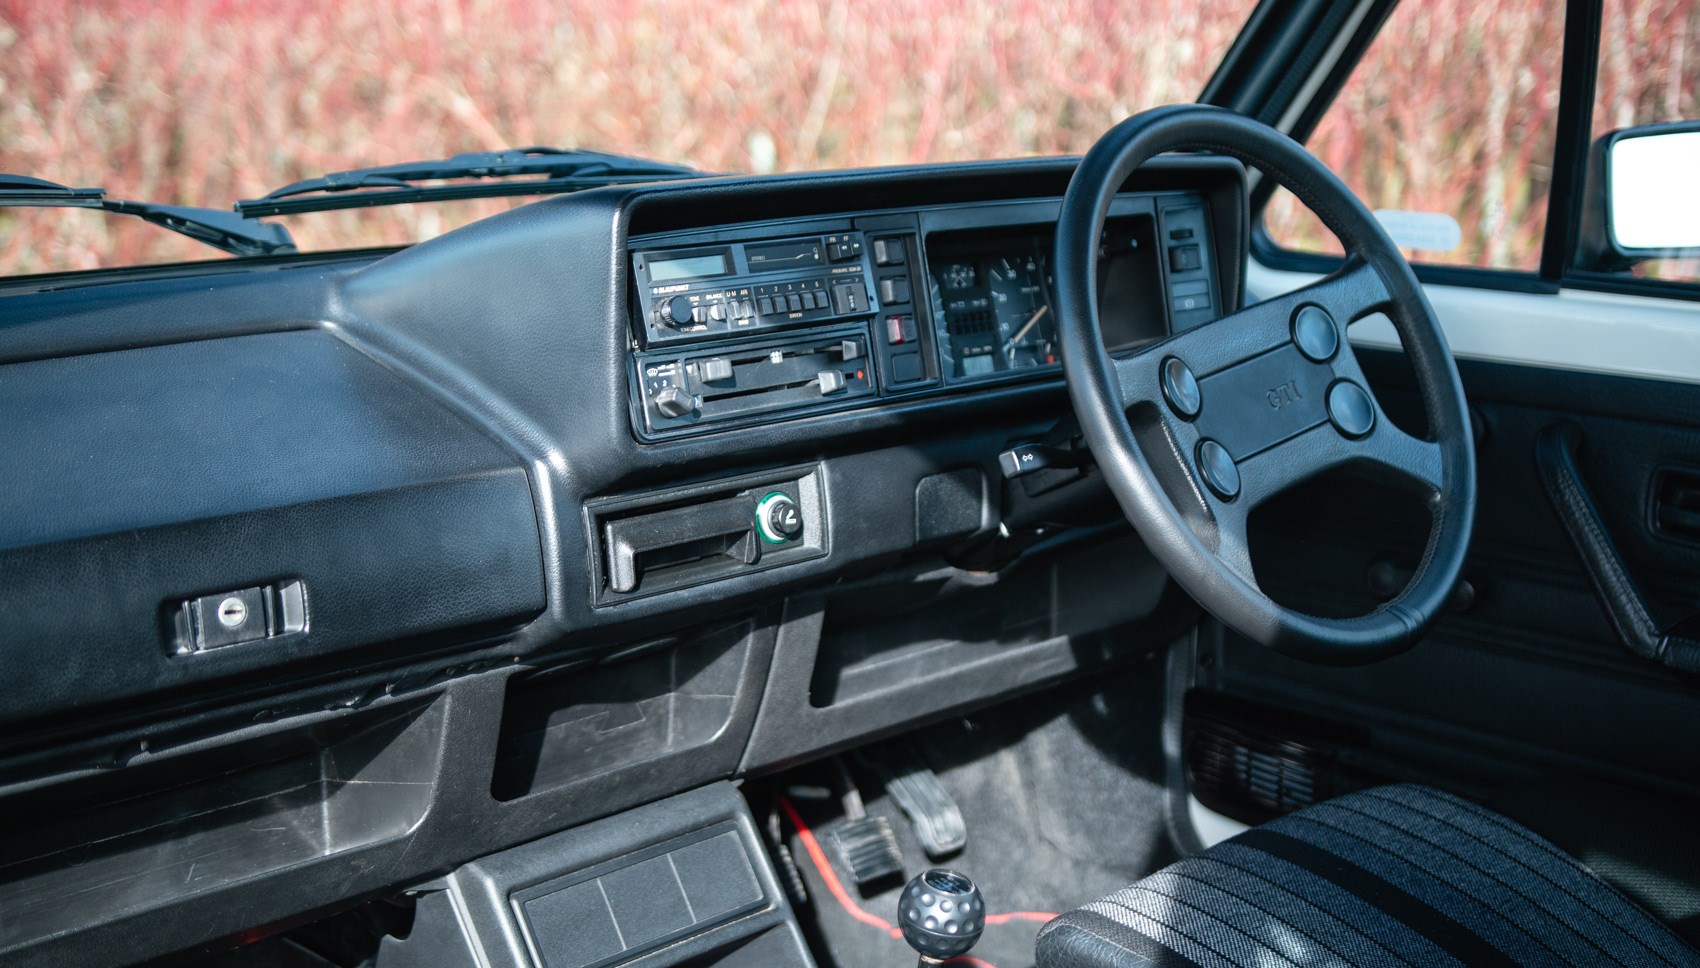 Golf GTI Mk1 interior